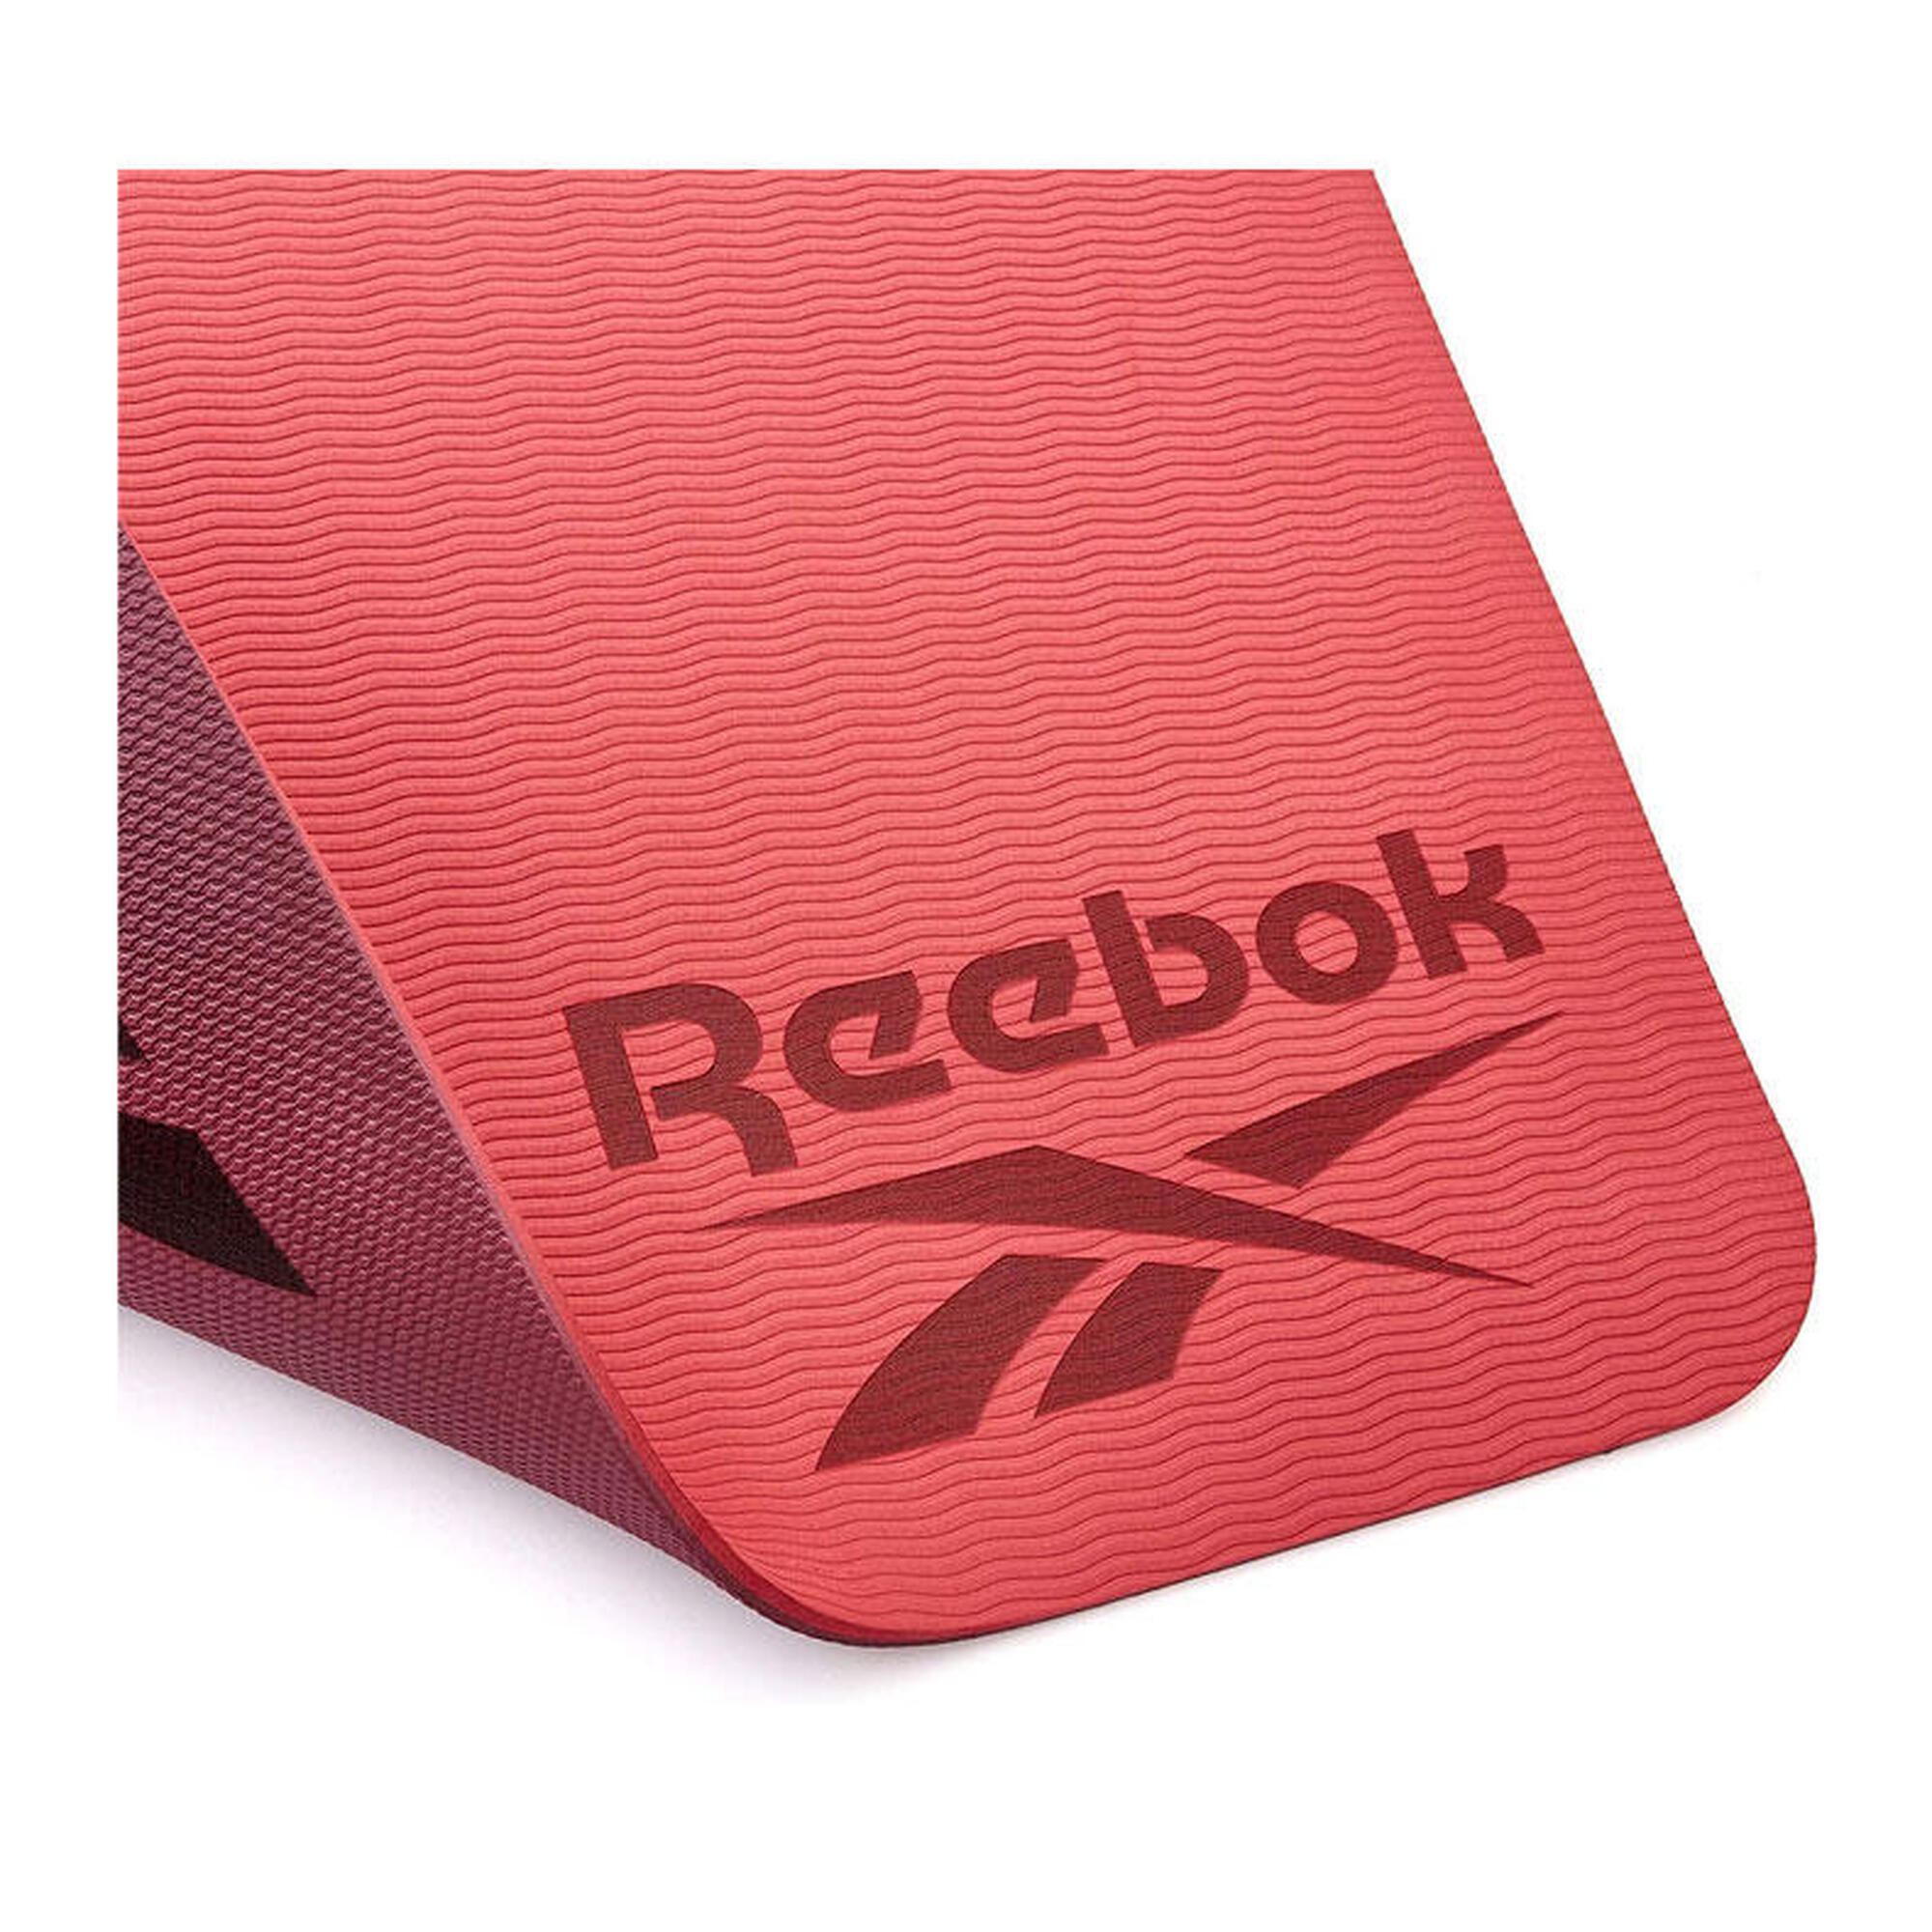 Tappetino Yoga bifacciale Reebok - 6 mm - Rosso